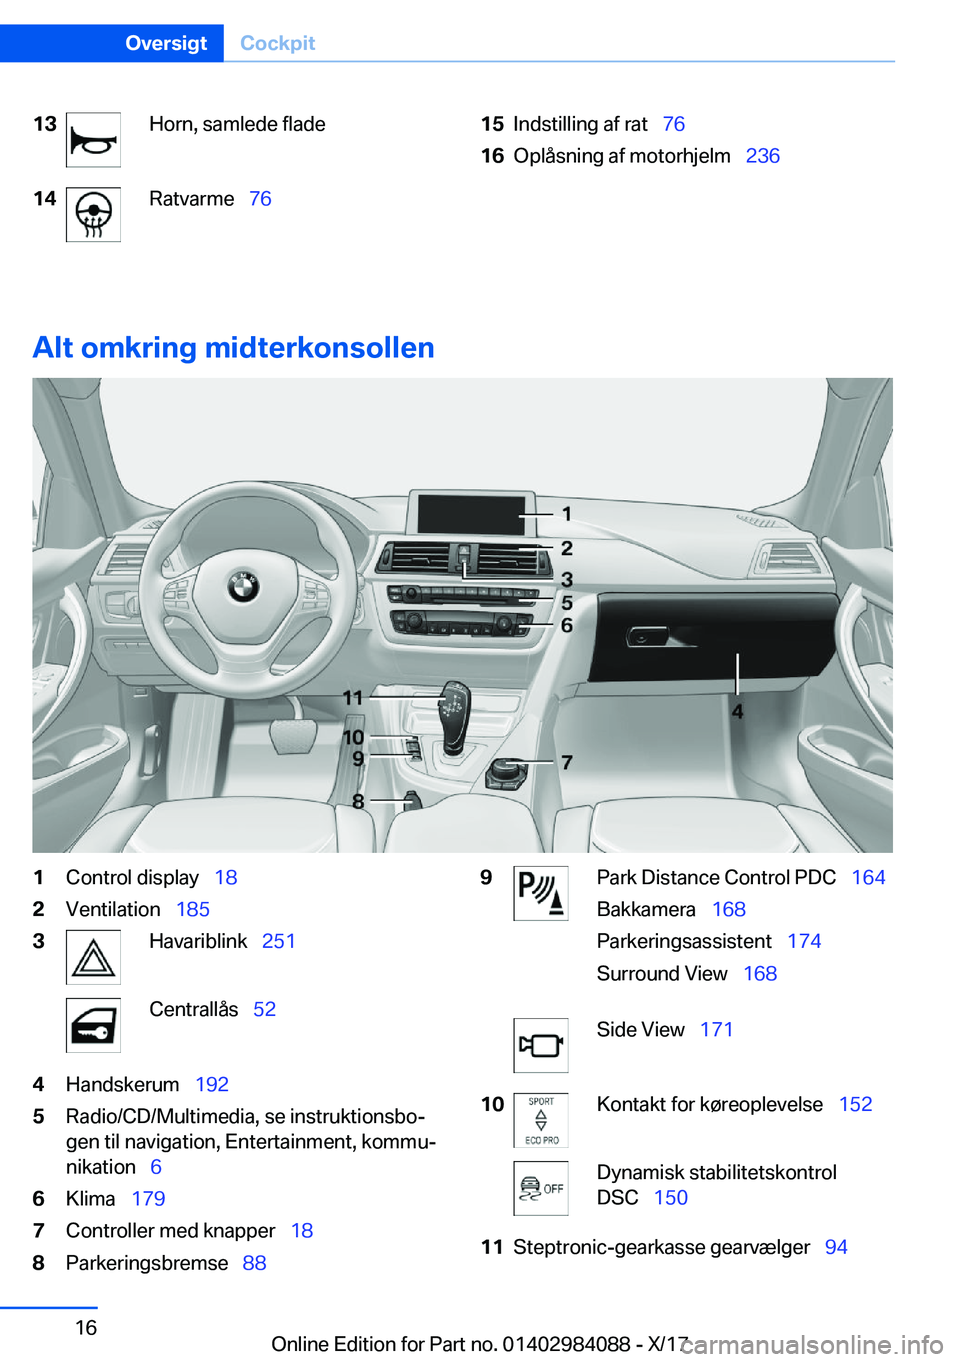 BMW 3 SERIES 2018  InstruktionsbØger (in Danish) �1�3�H�o�r�n�,� �s�a�m�l�e�d�e� �f�l�a�d�e�1�4�R�a�t�v�a�r�m�e\_�7�6�1�5�I�n�d�s�t�i�l�l�i�n�g� �a�f� �r�a�t\_ �7�6�1�6�O�p�l�å�s�n�i�n�g� �a�f� �m�o�t�o�r�h�j�e�l�m\_ �2�3�6
�A�l�t��o�m�k�r�i